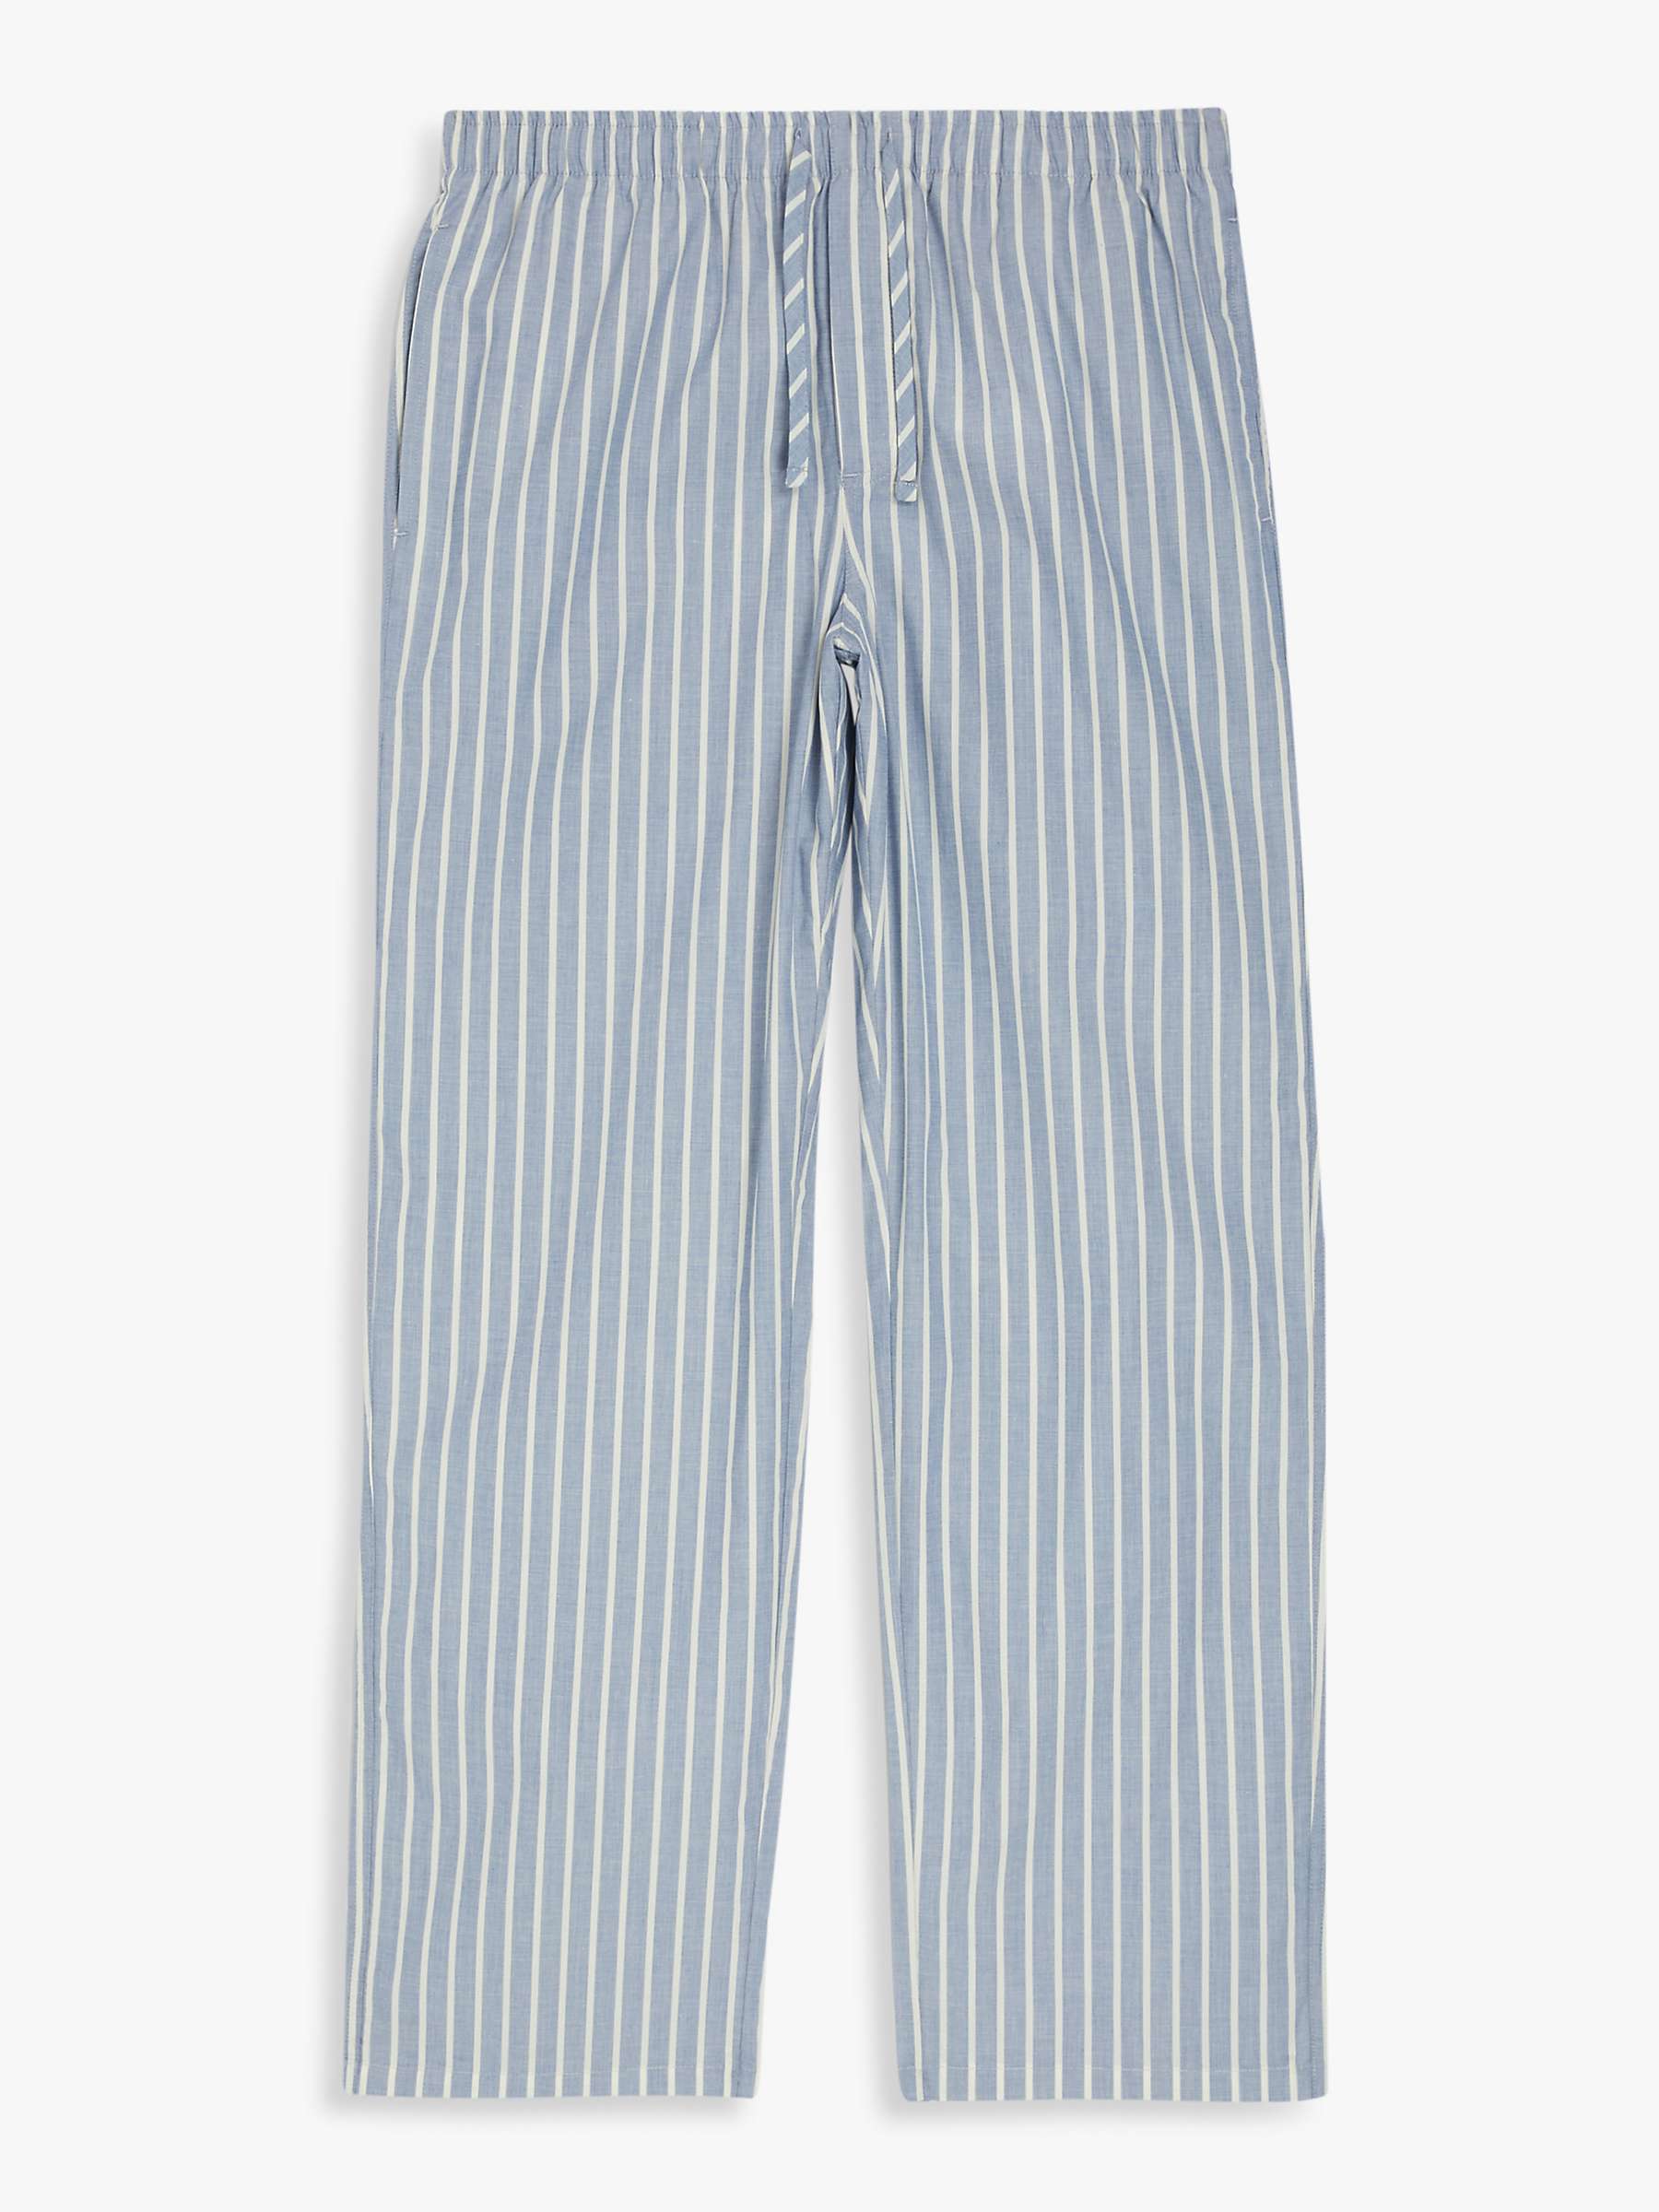 John Lewis Organic Cotton Poplin Stripe Pyjama Bottoms, Blue